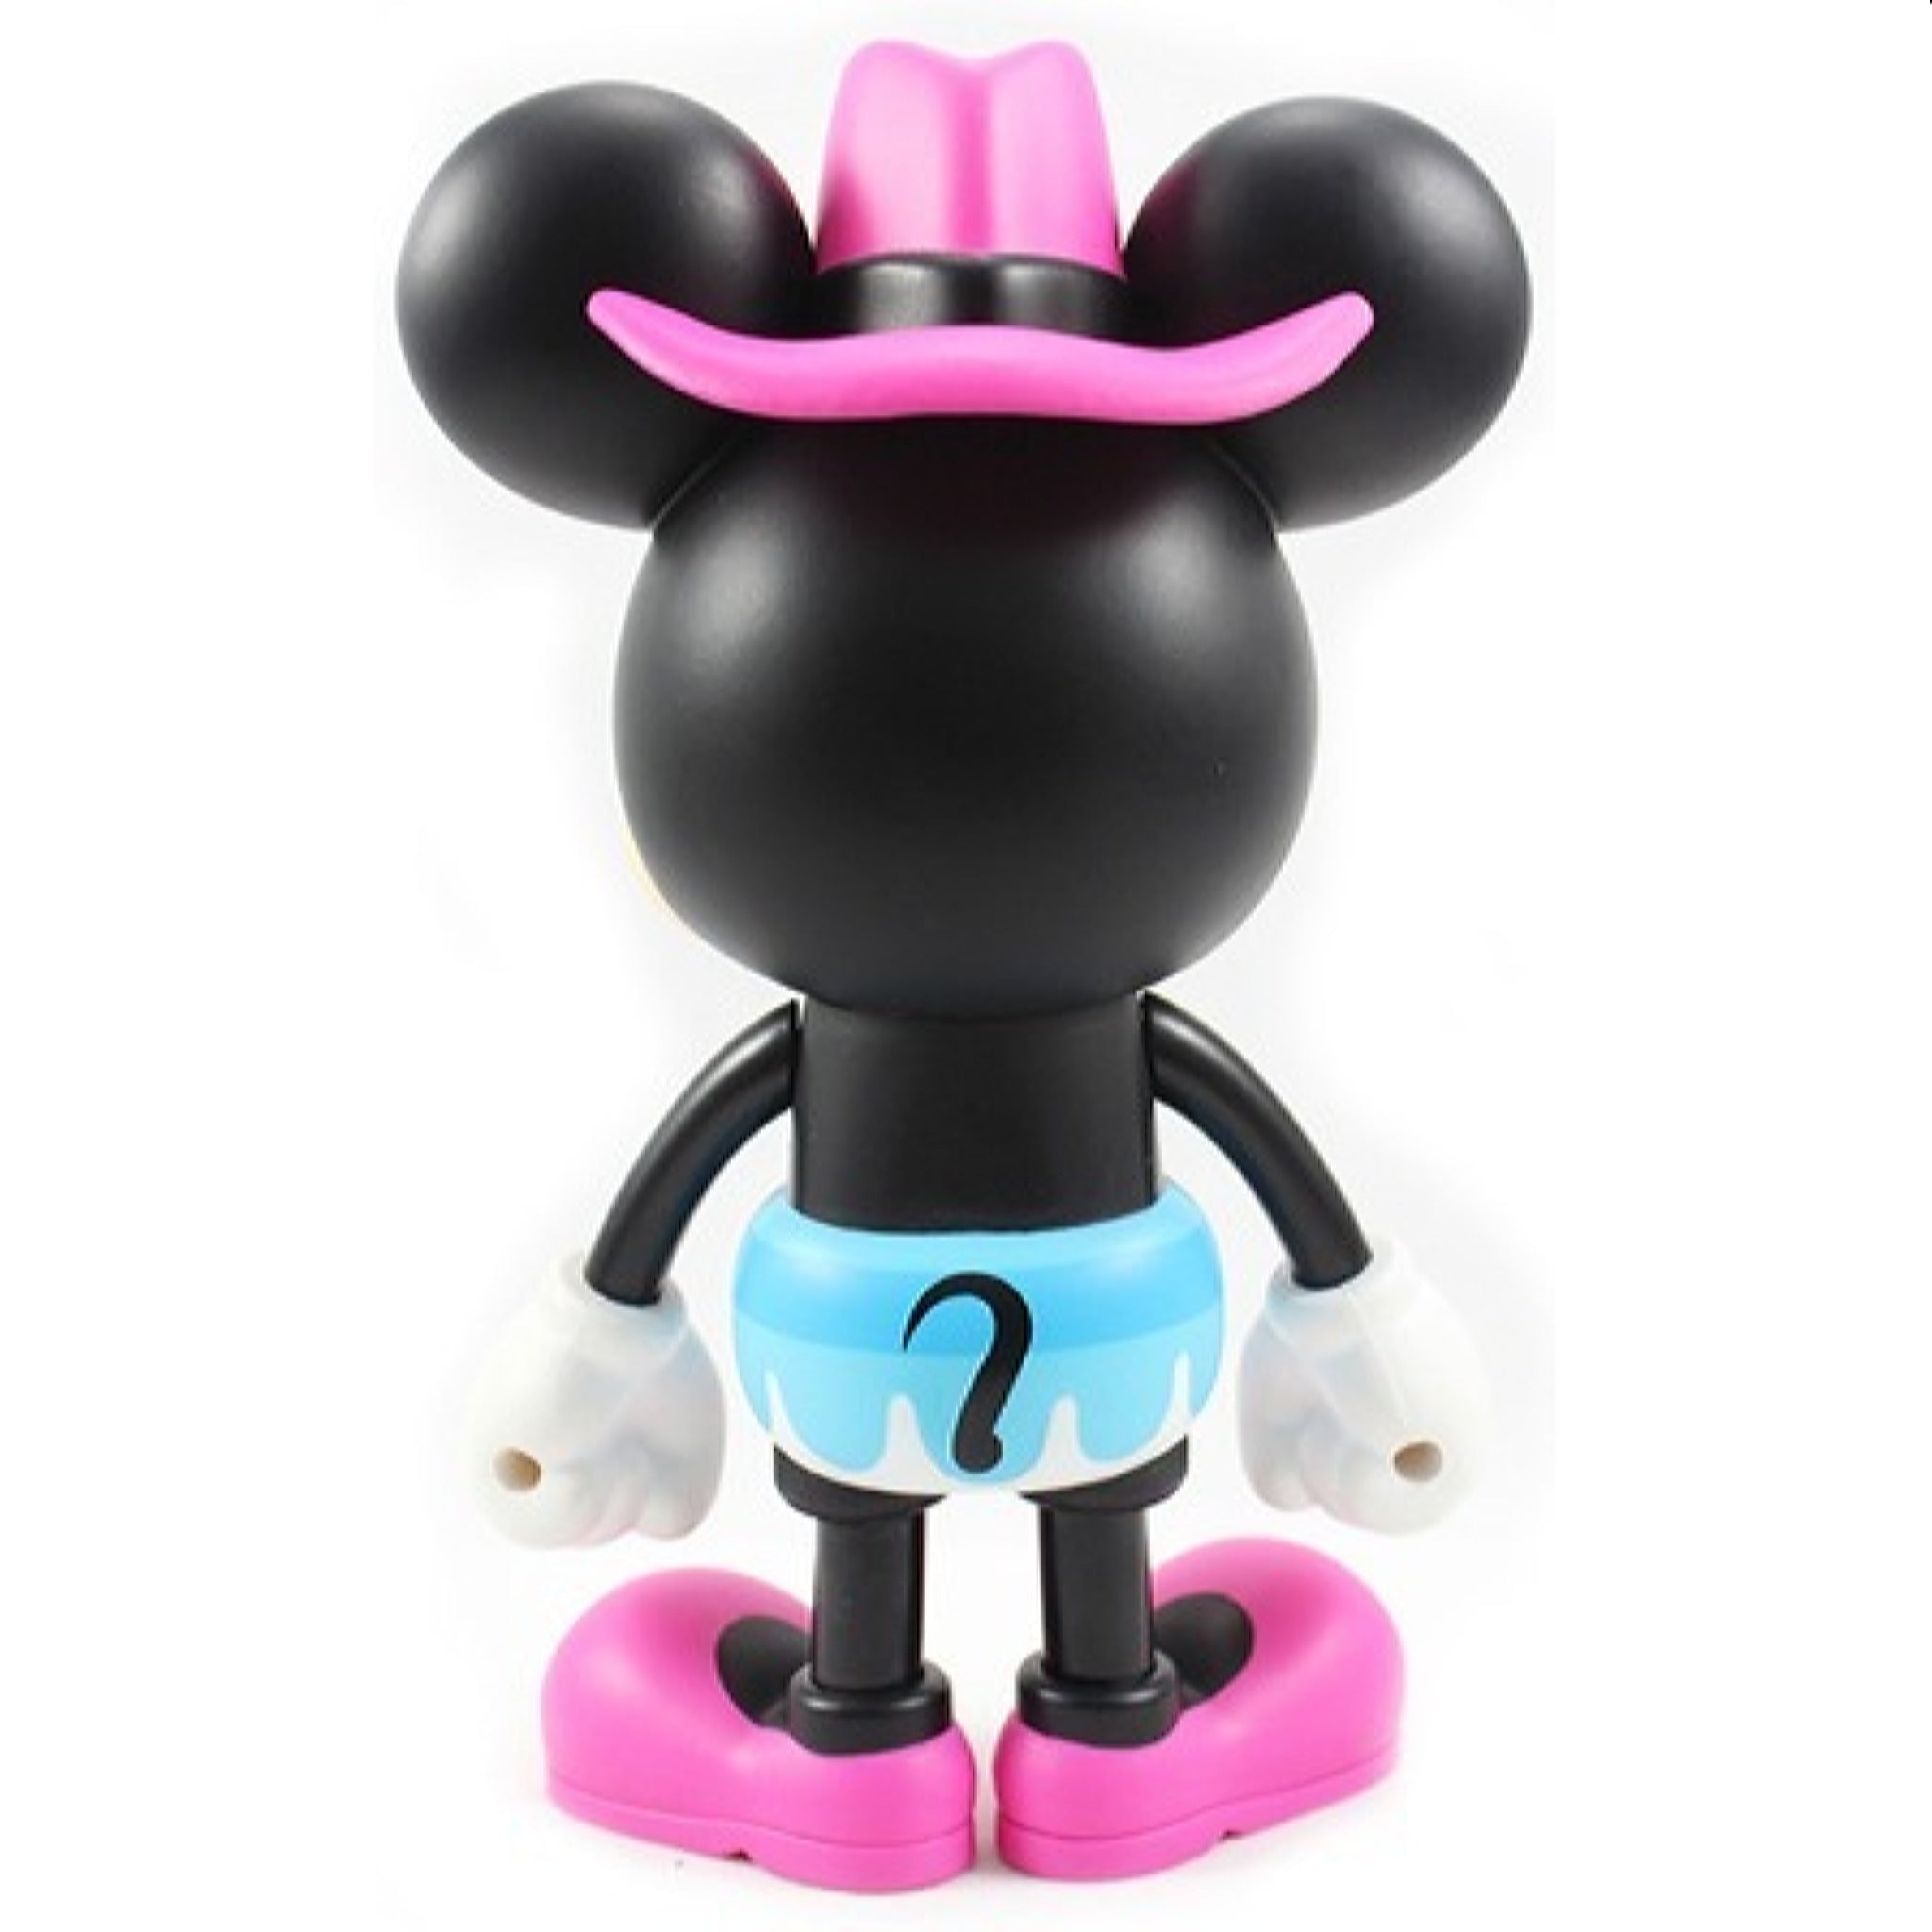 Disney Cowgirl Minnie Mouse Vinyl Art Figure Play Imaginative DAMAGED BOX